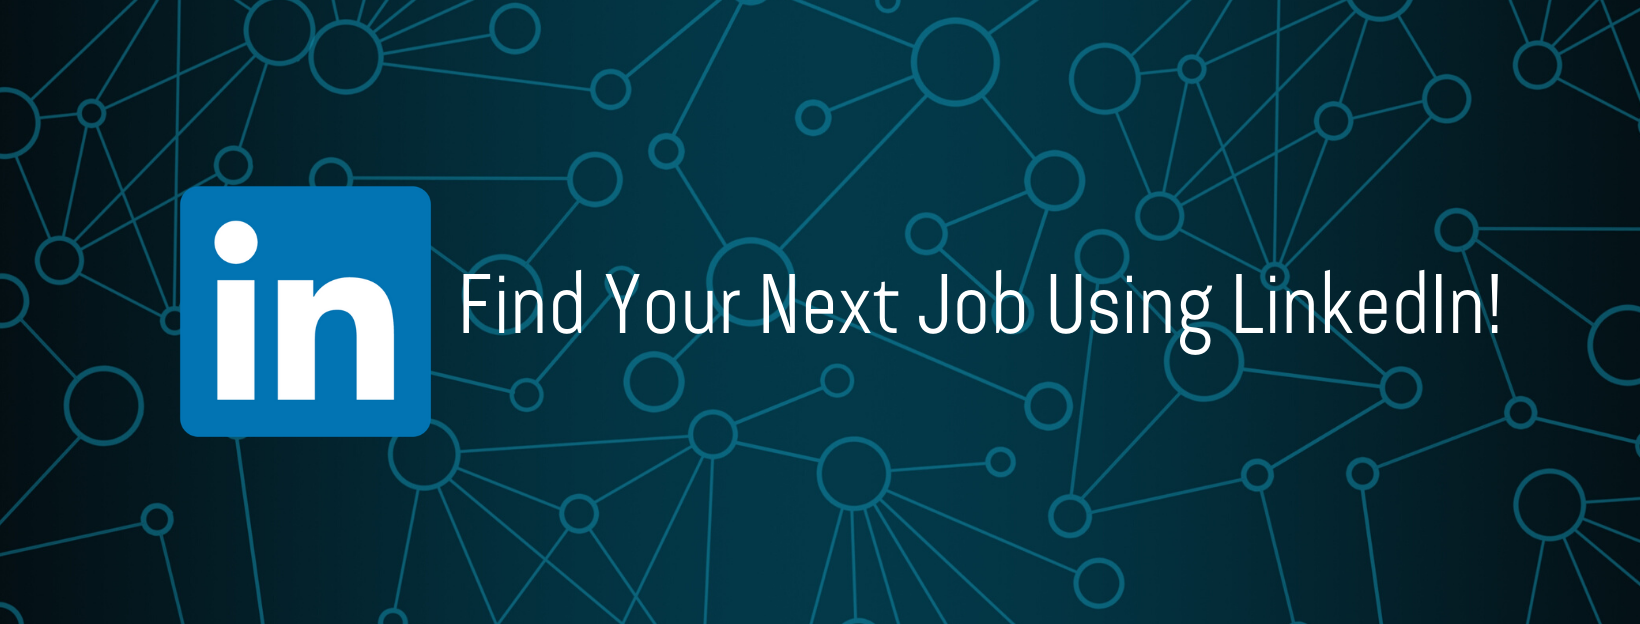 LinkedIn Job Search Webinar - Career Design Associates